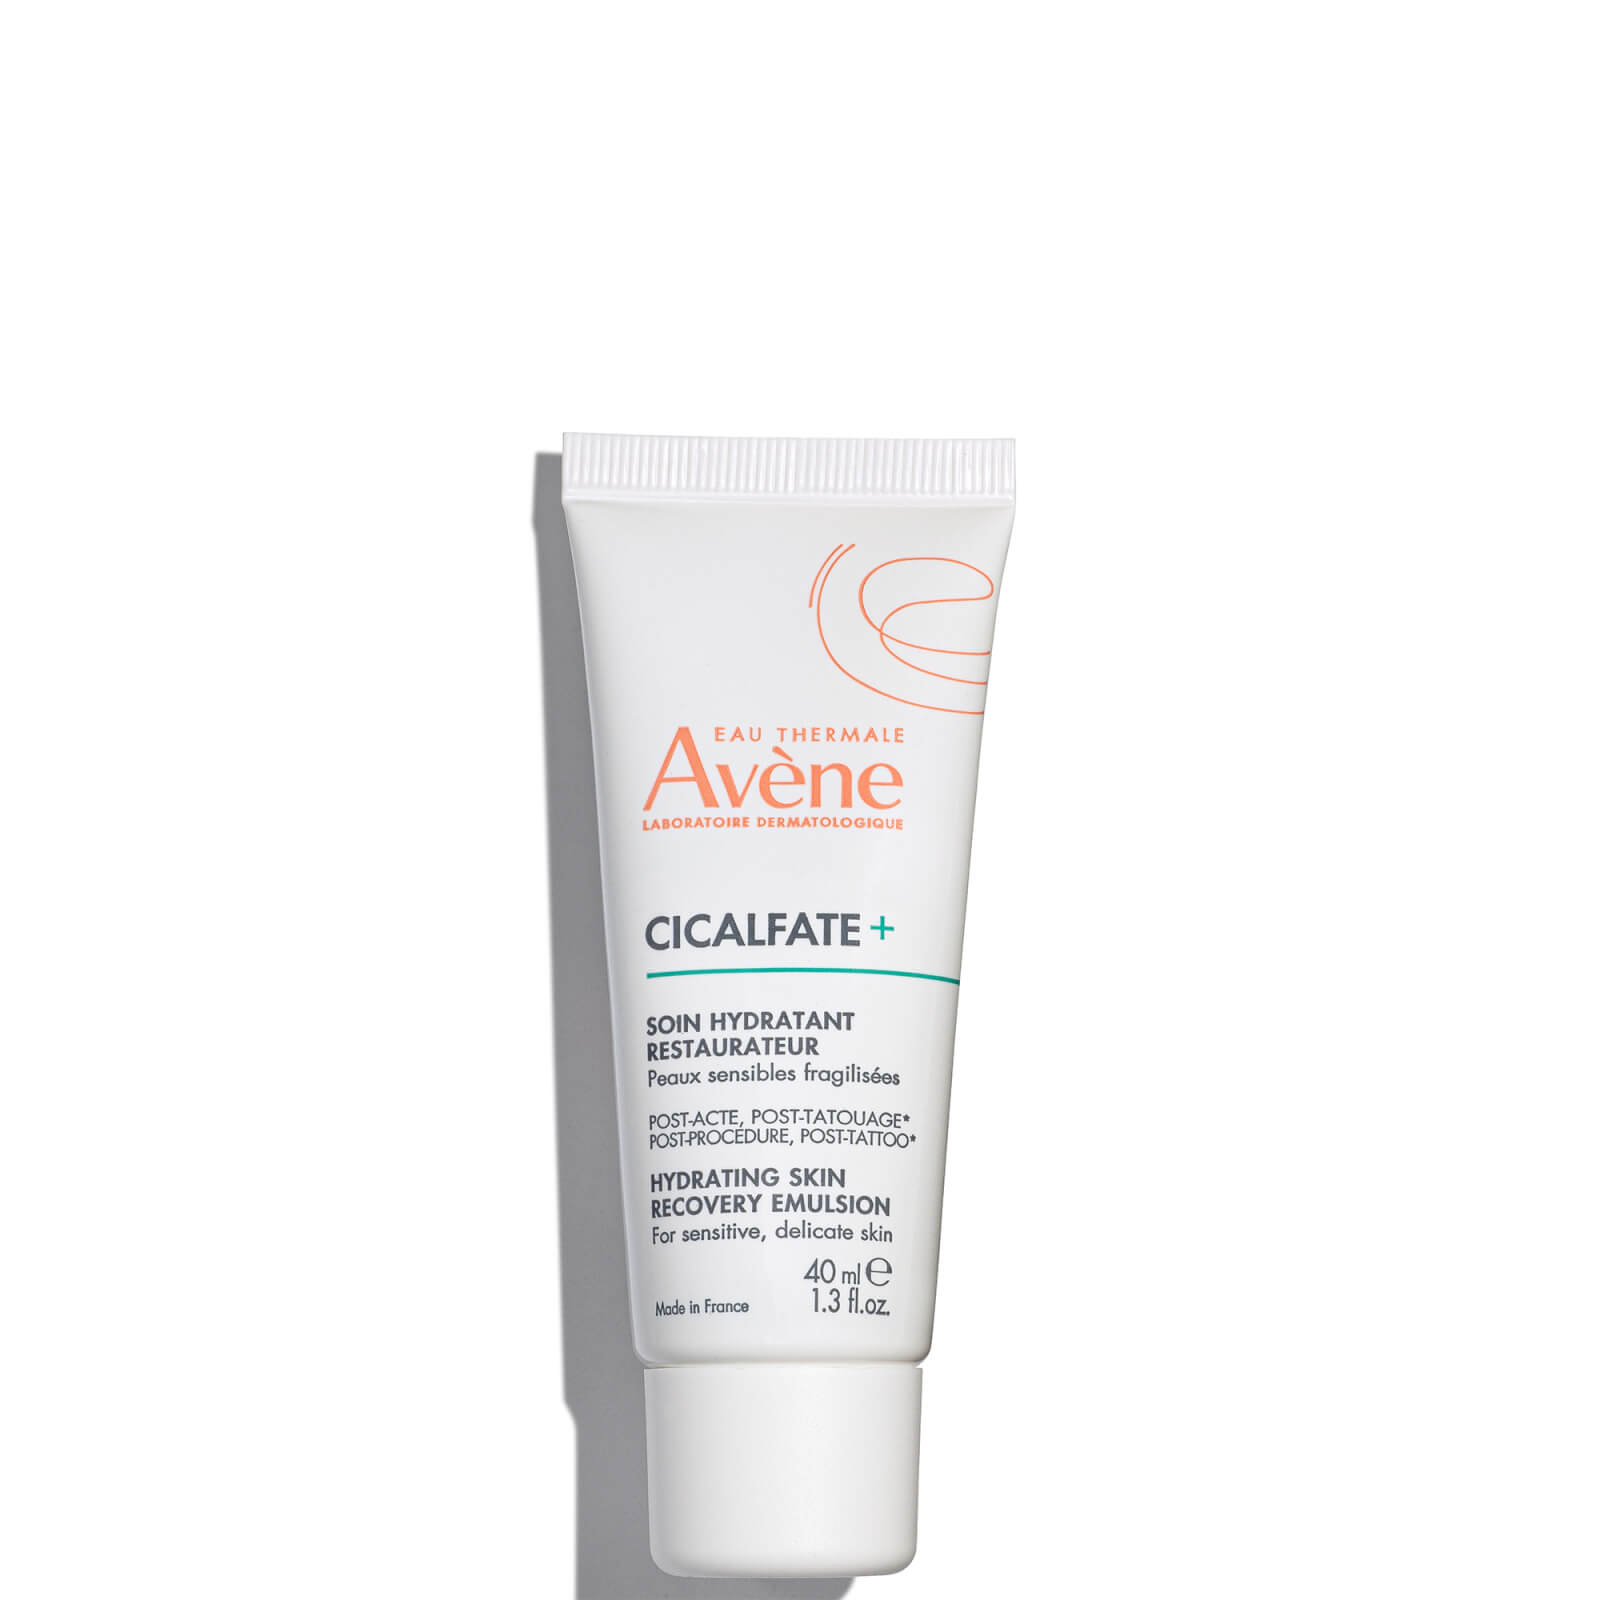 Avene Cicalfate+ Hydrating Skin Recovery Emulsion 1.3 Fl.oz.